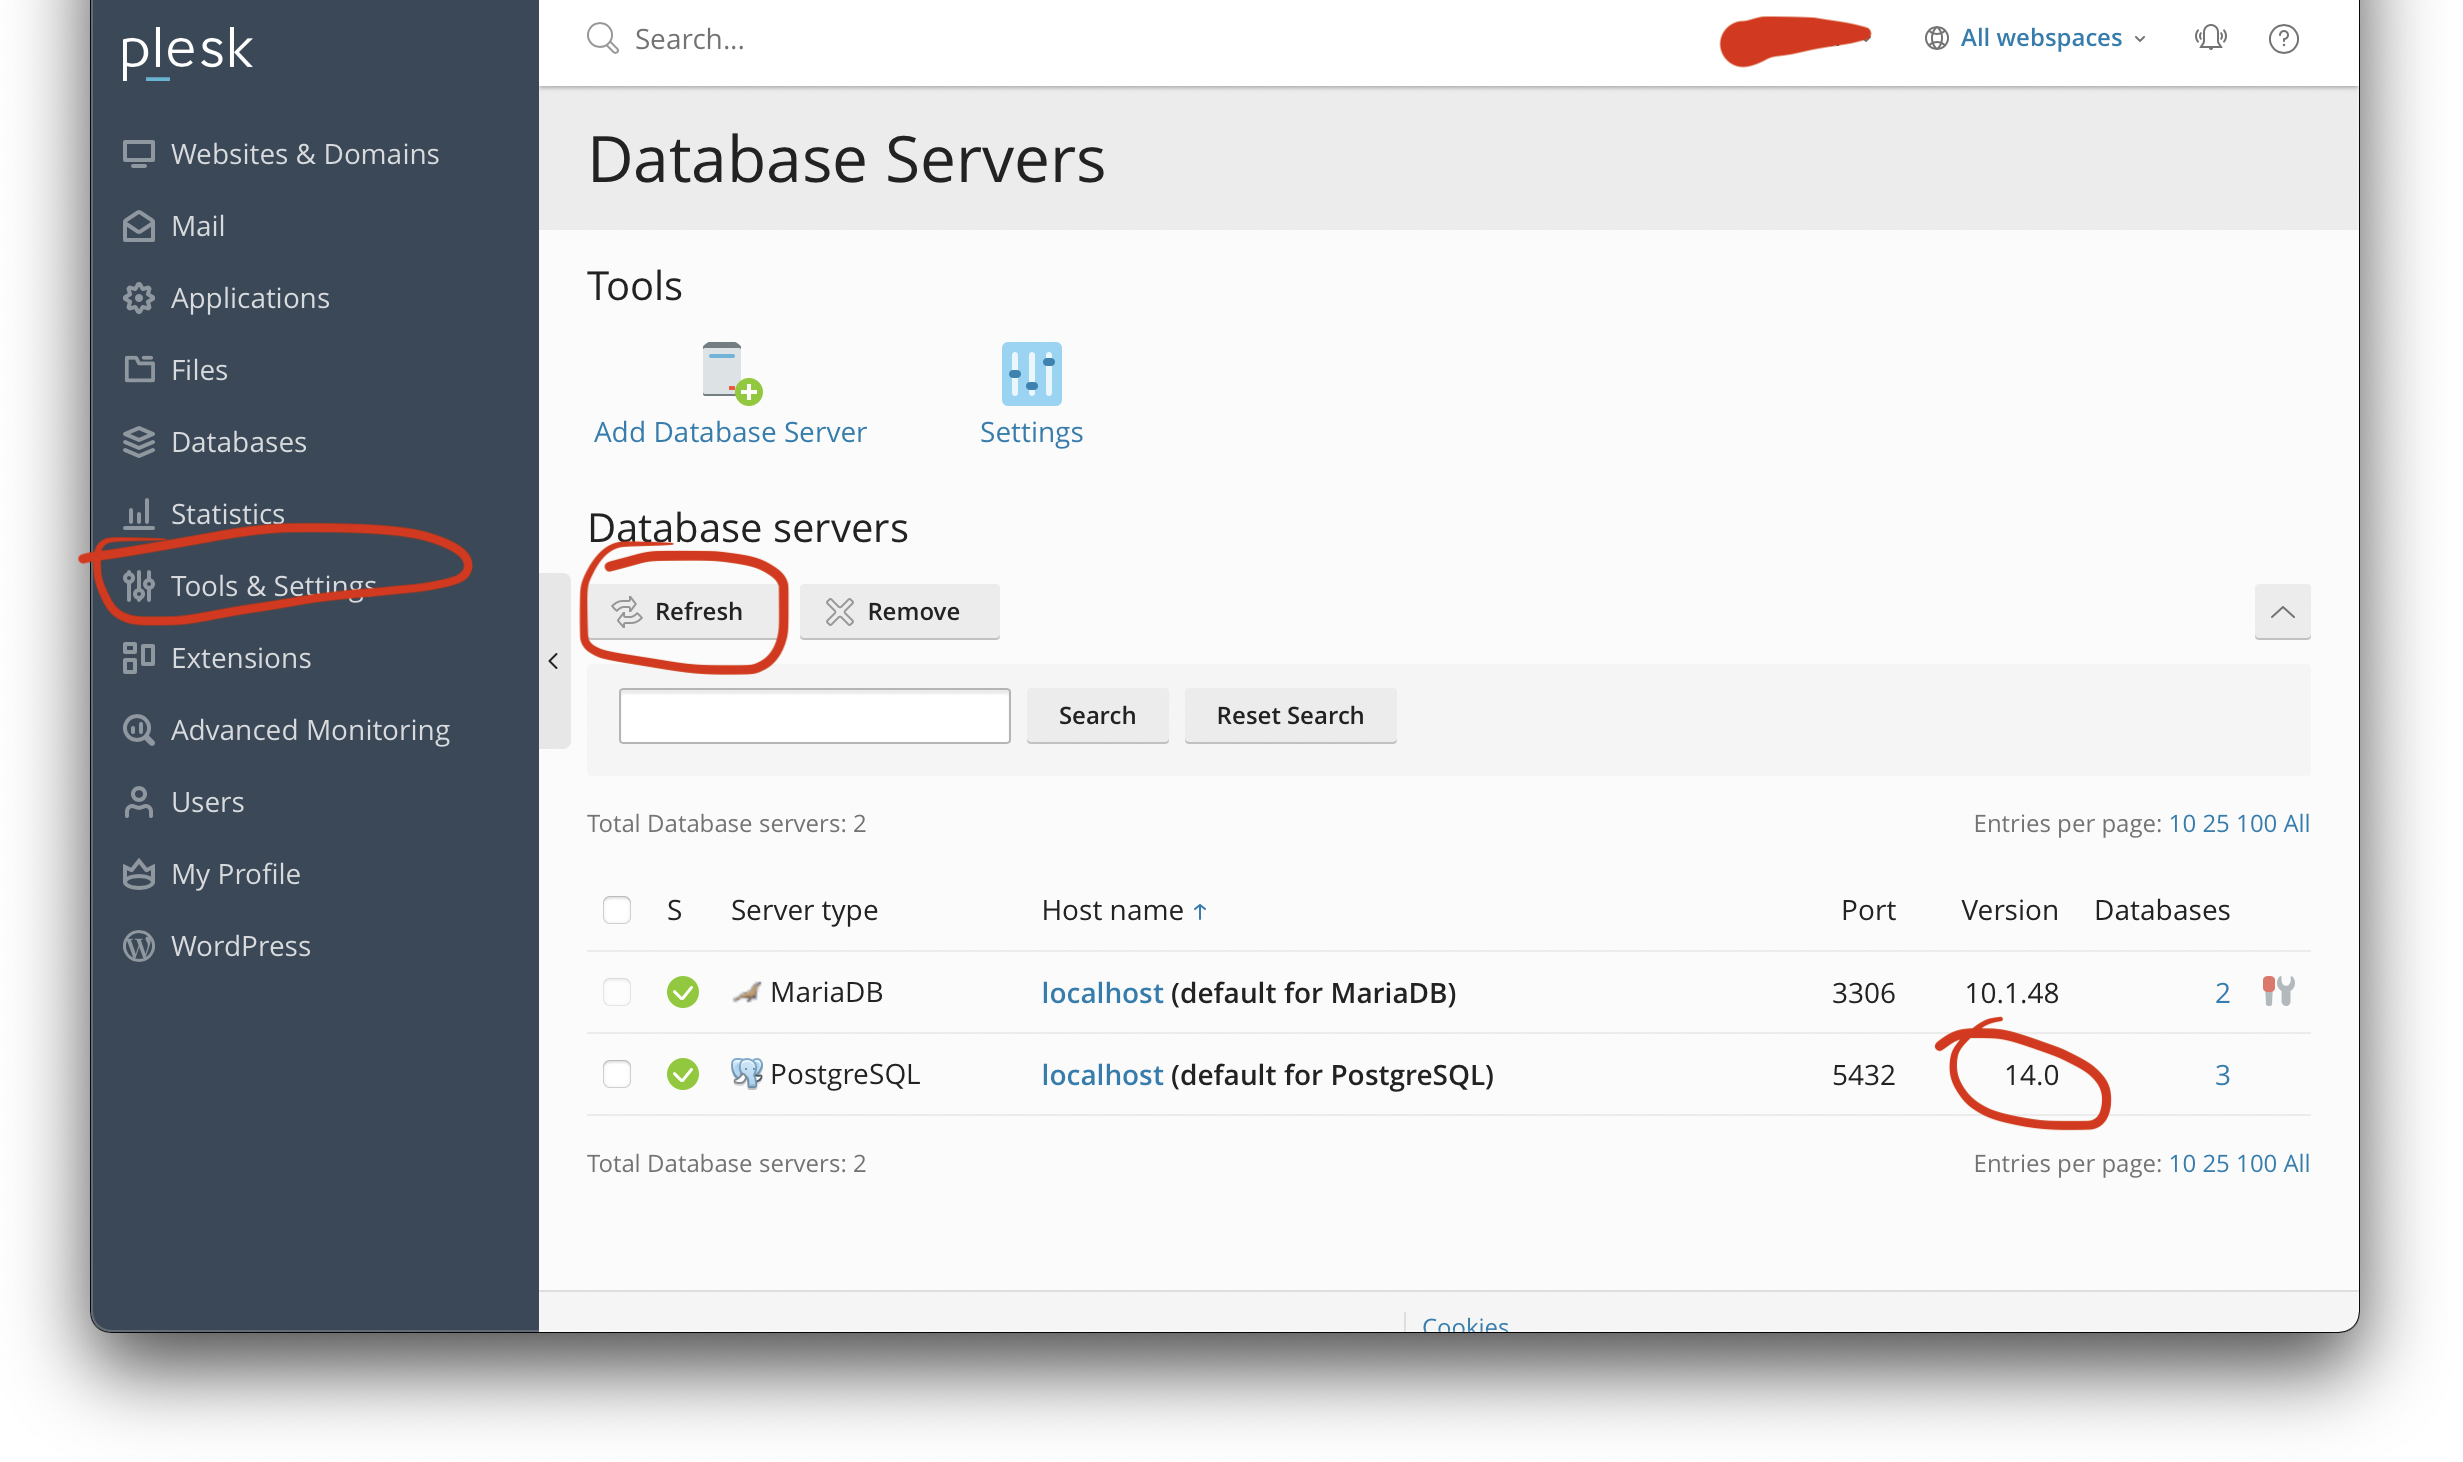 The Database Servers tab